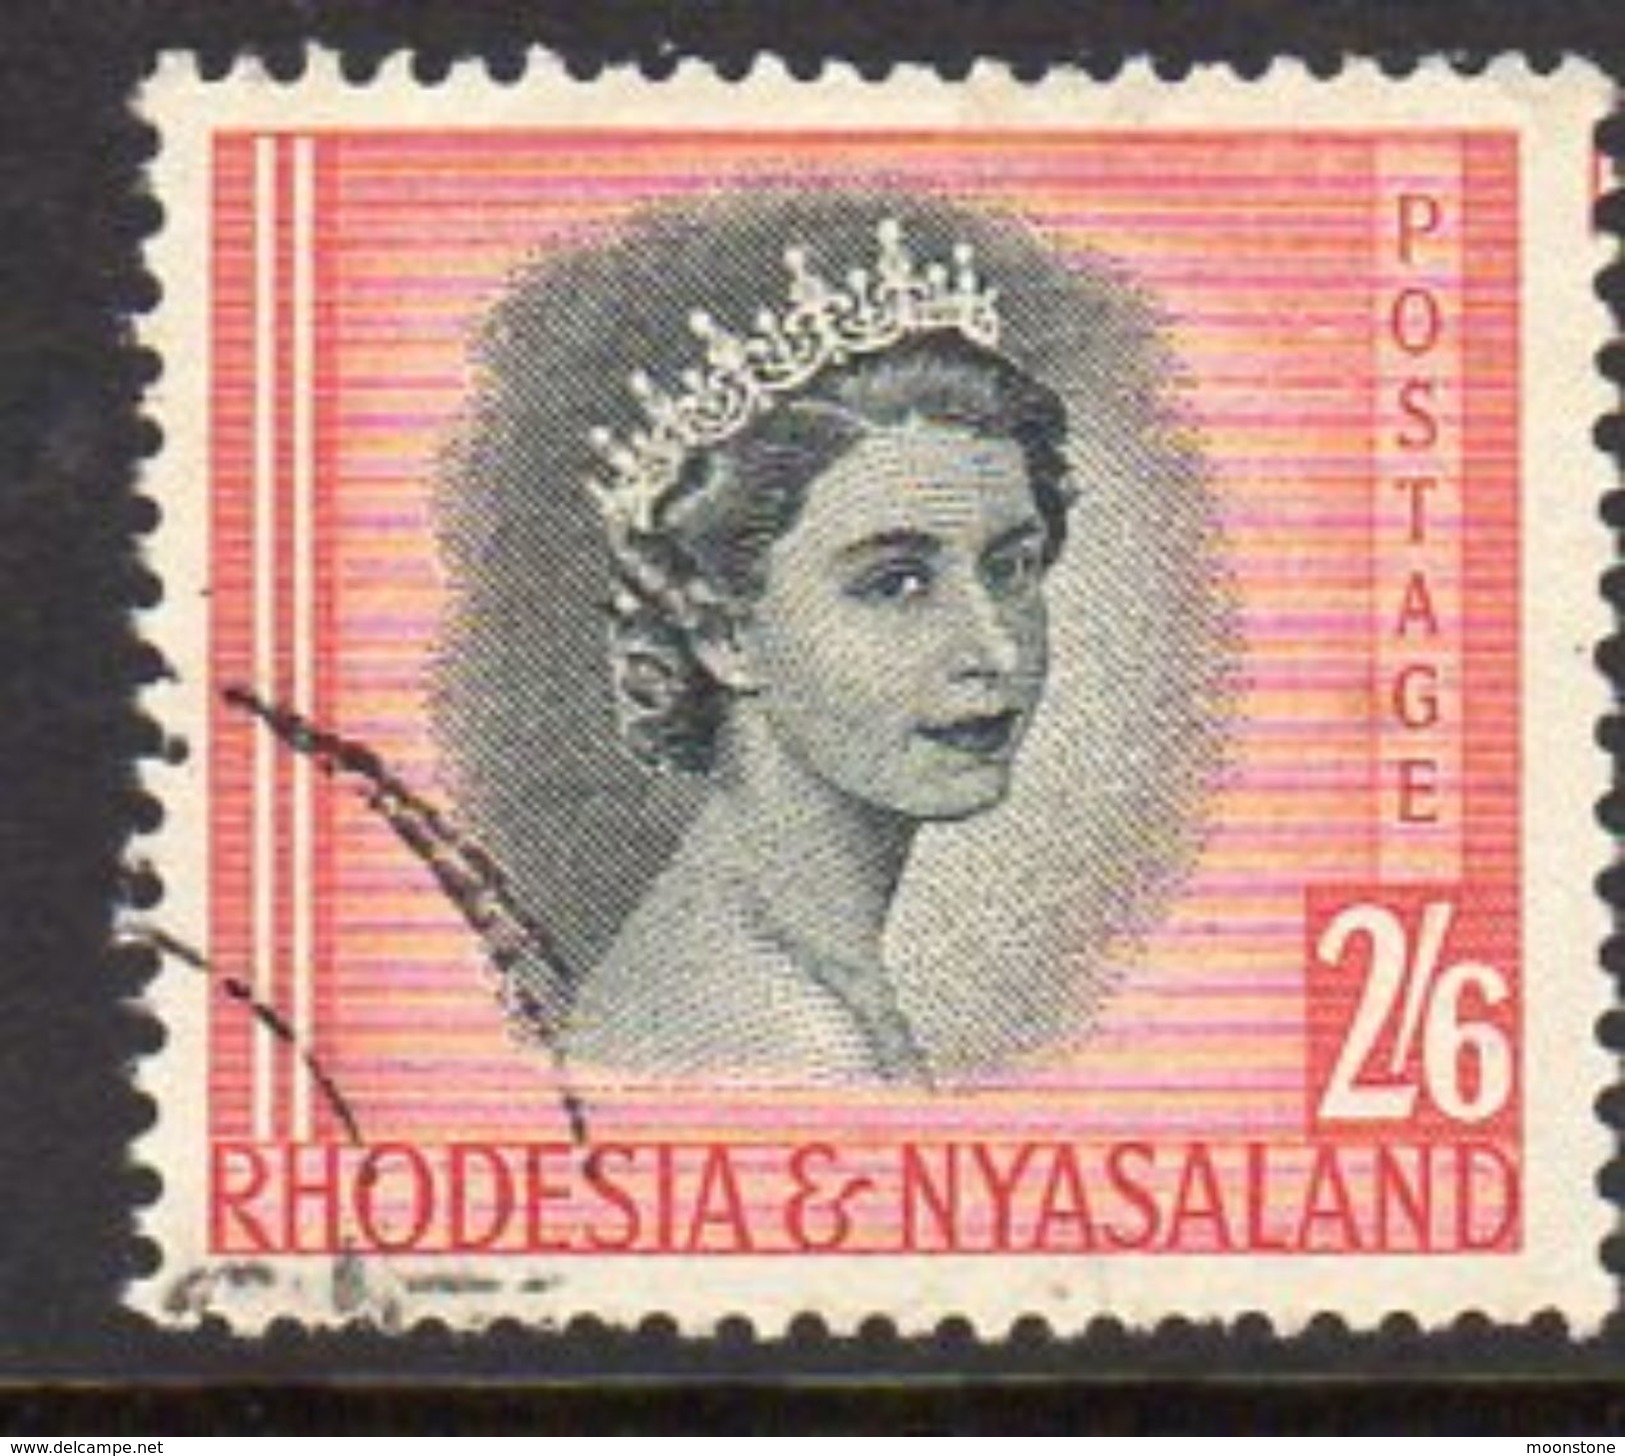 Rhodesia & Nyasaland 1954 2/6d Definitive, Used, SG 12 (BA) - Rhodesië & Nyasaland (1954-1963)